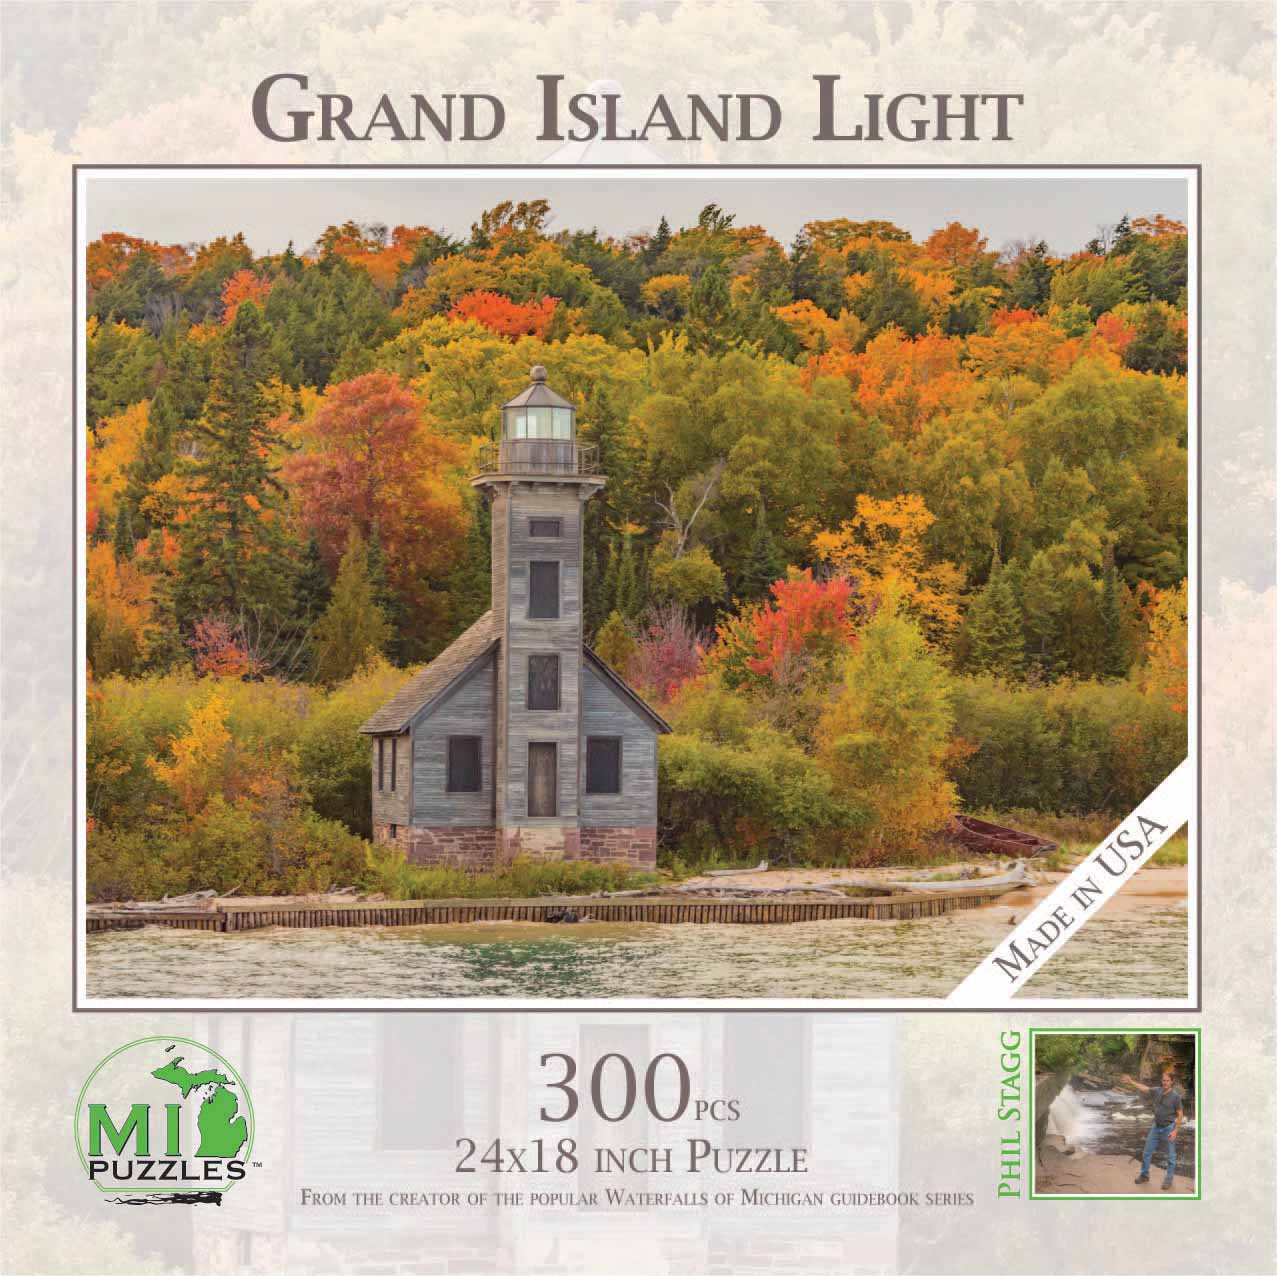 Grand Island Light Lighthouse Jigsaw Puzzle